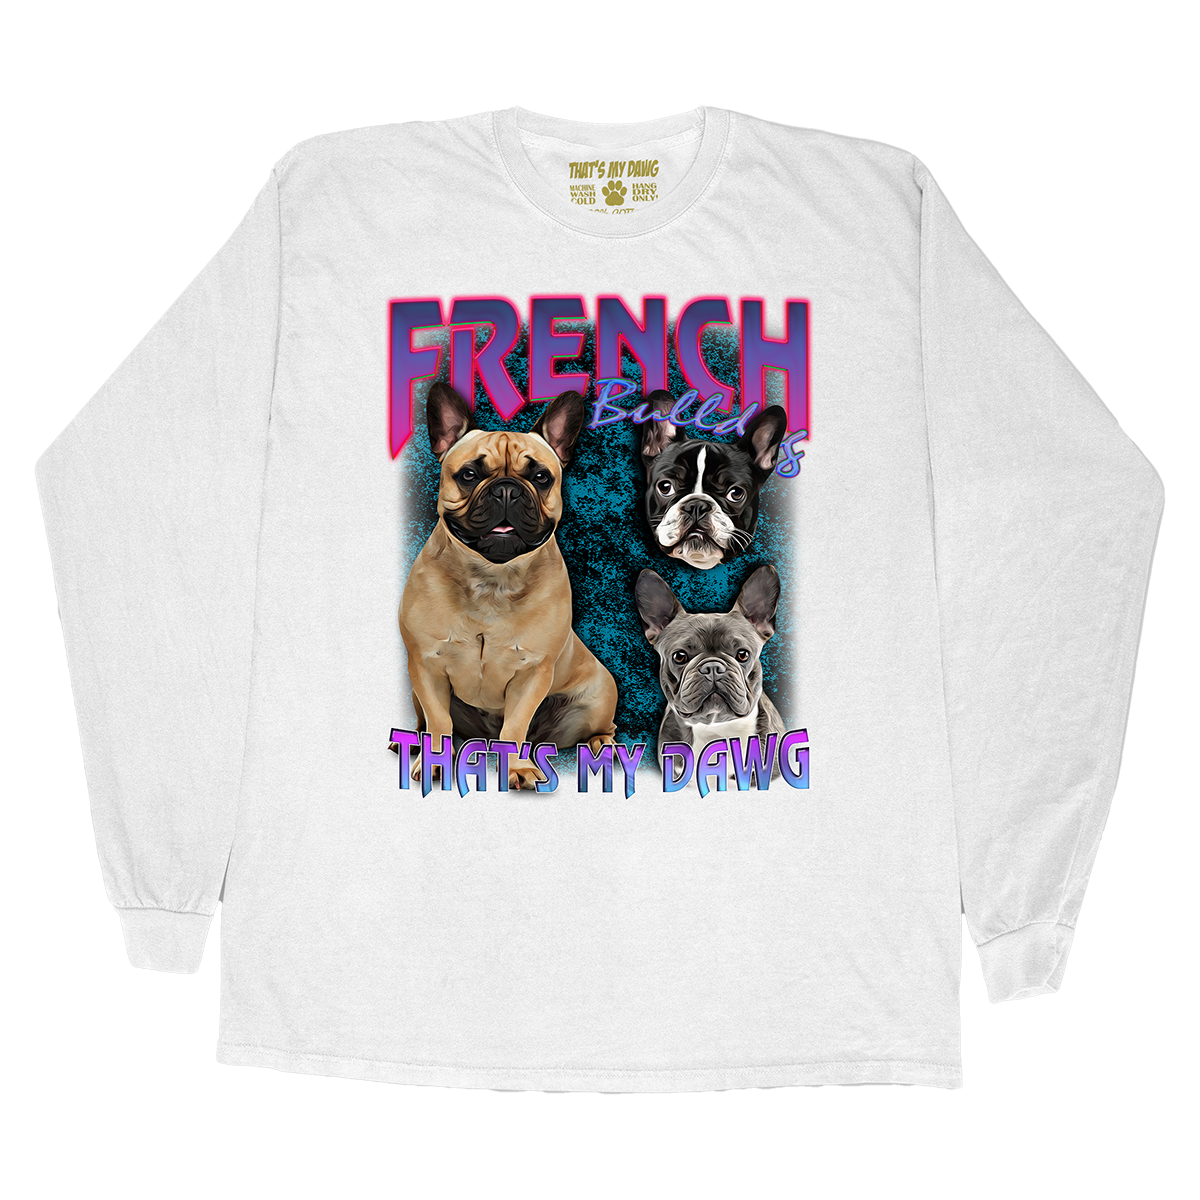 90's Style French Bulldog Long Sleeves